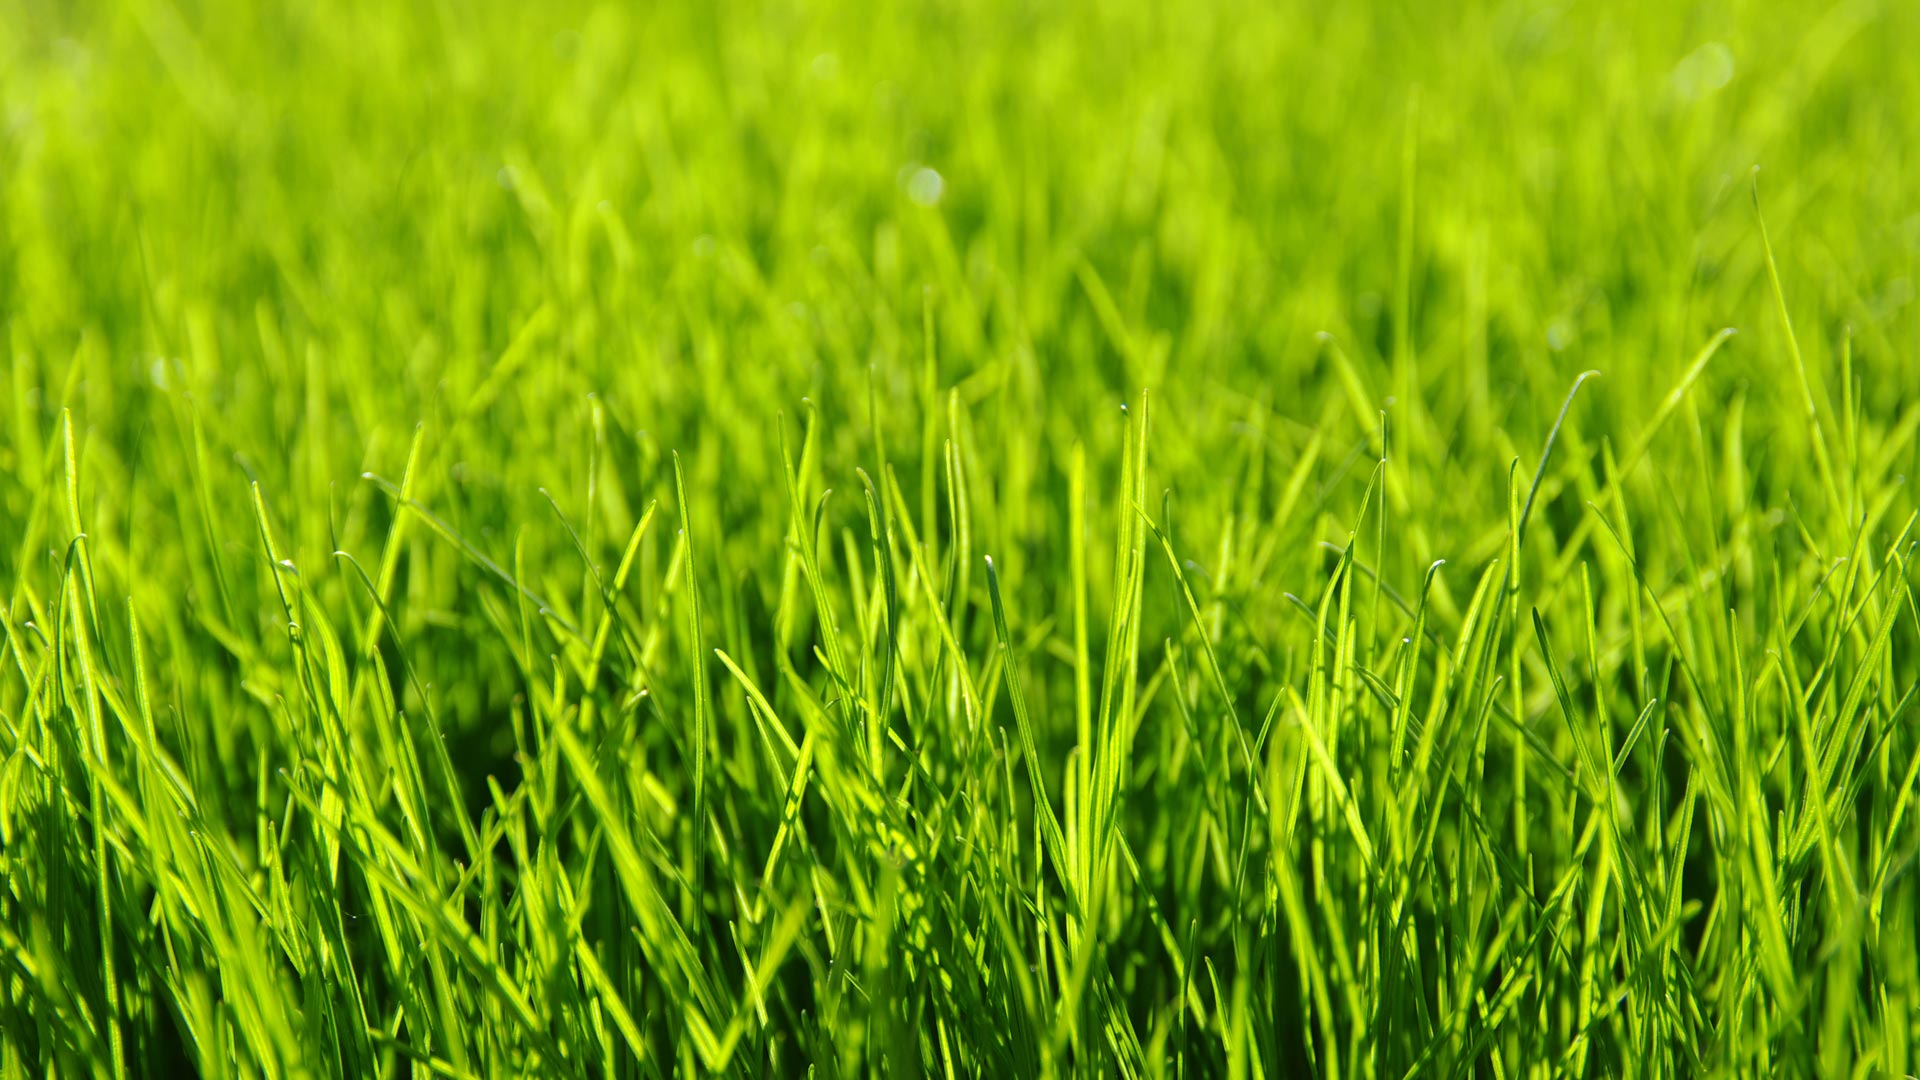 Luscious healthy grass blades in a lawn in Manhattan, NY.